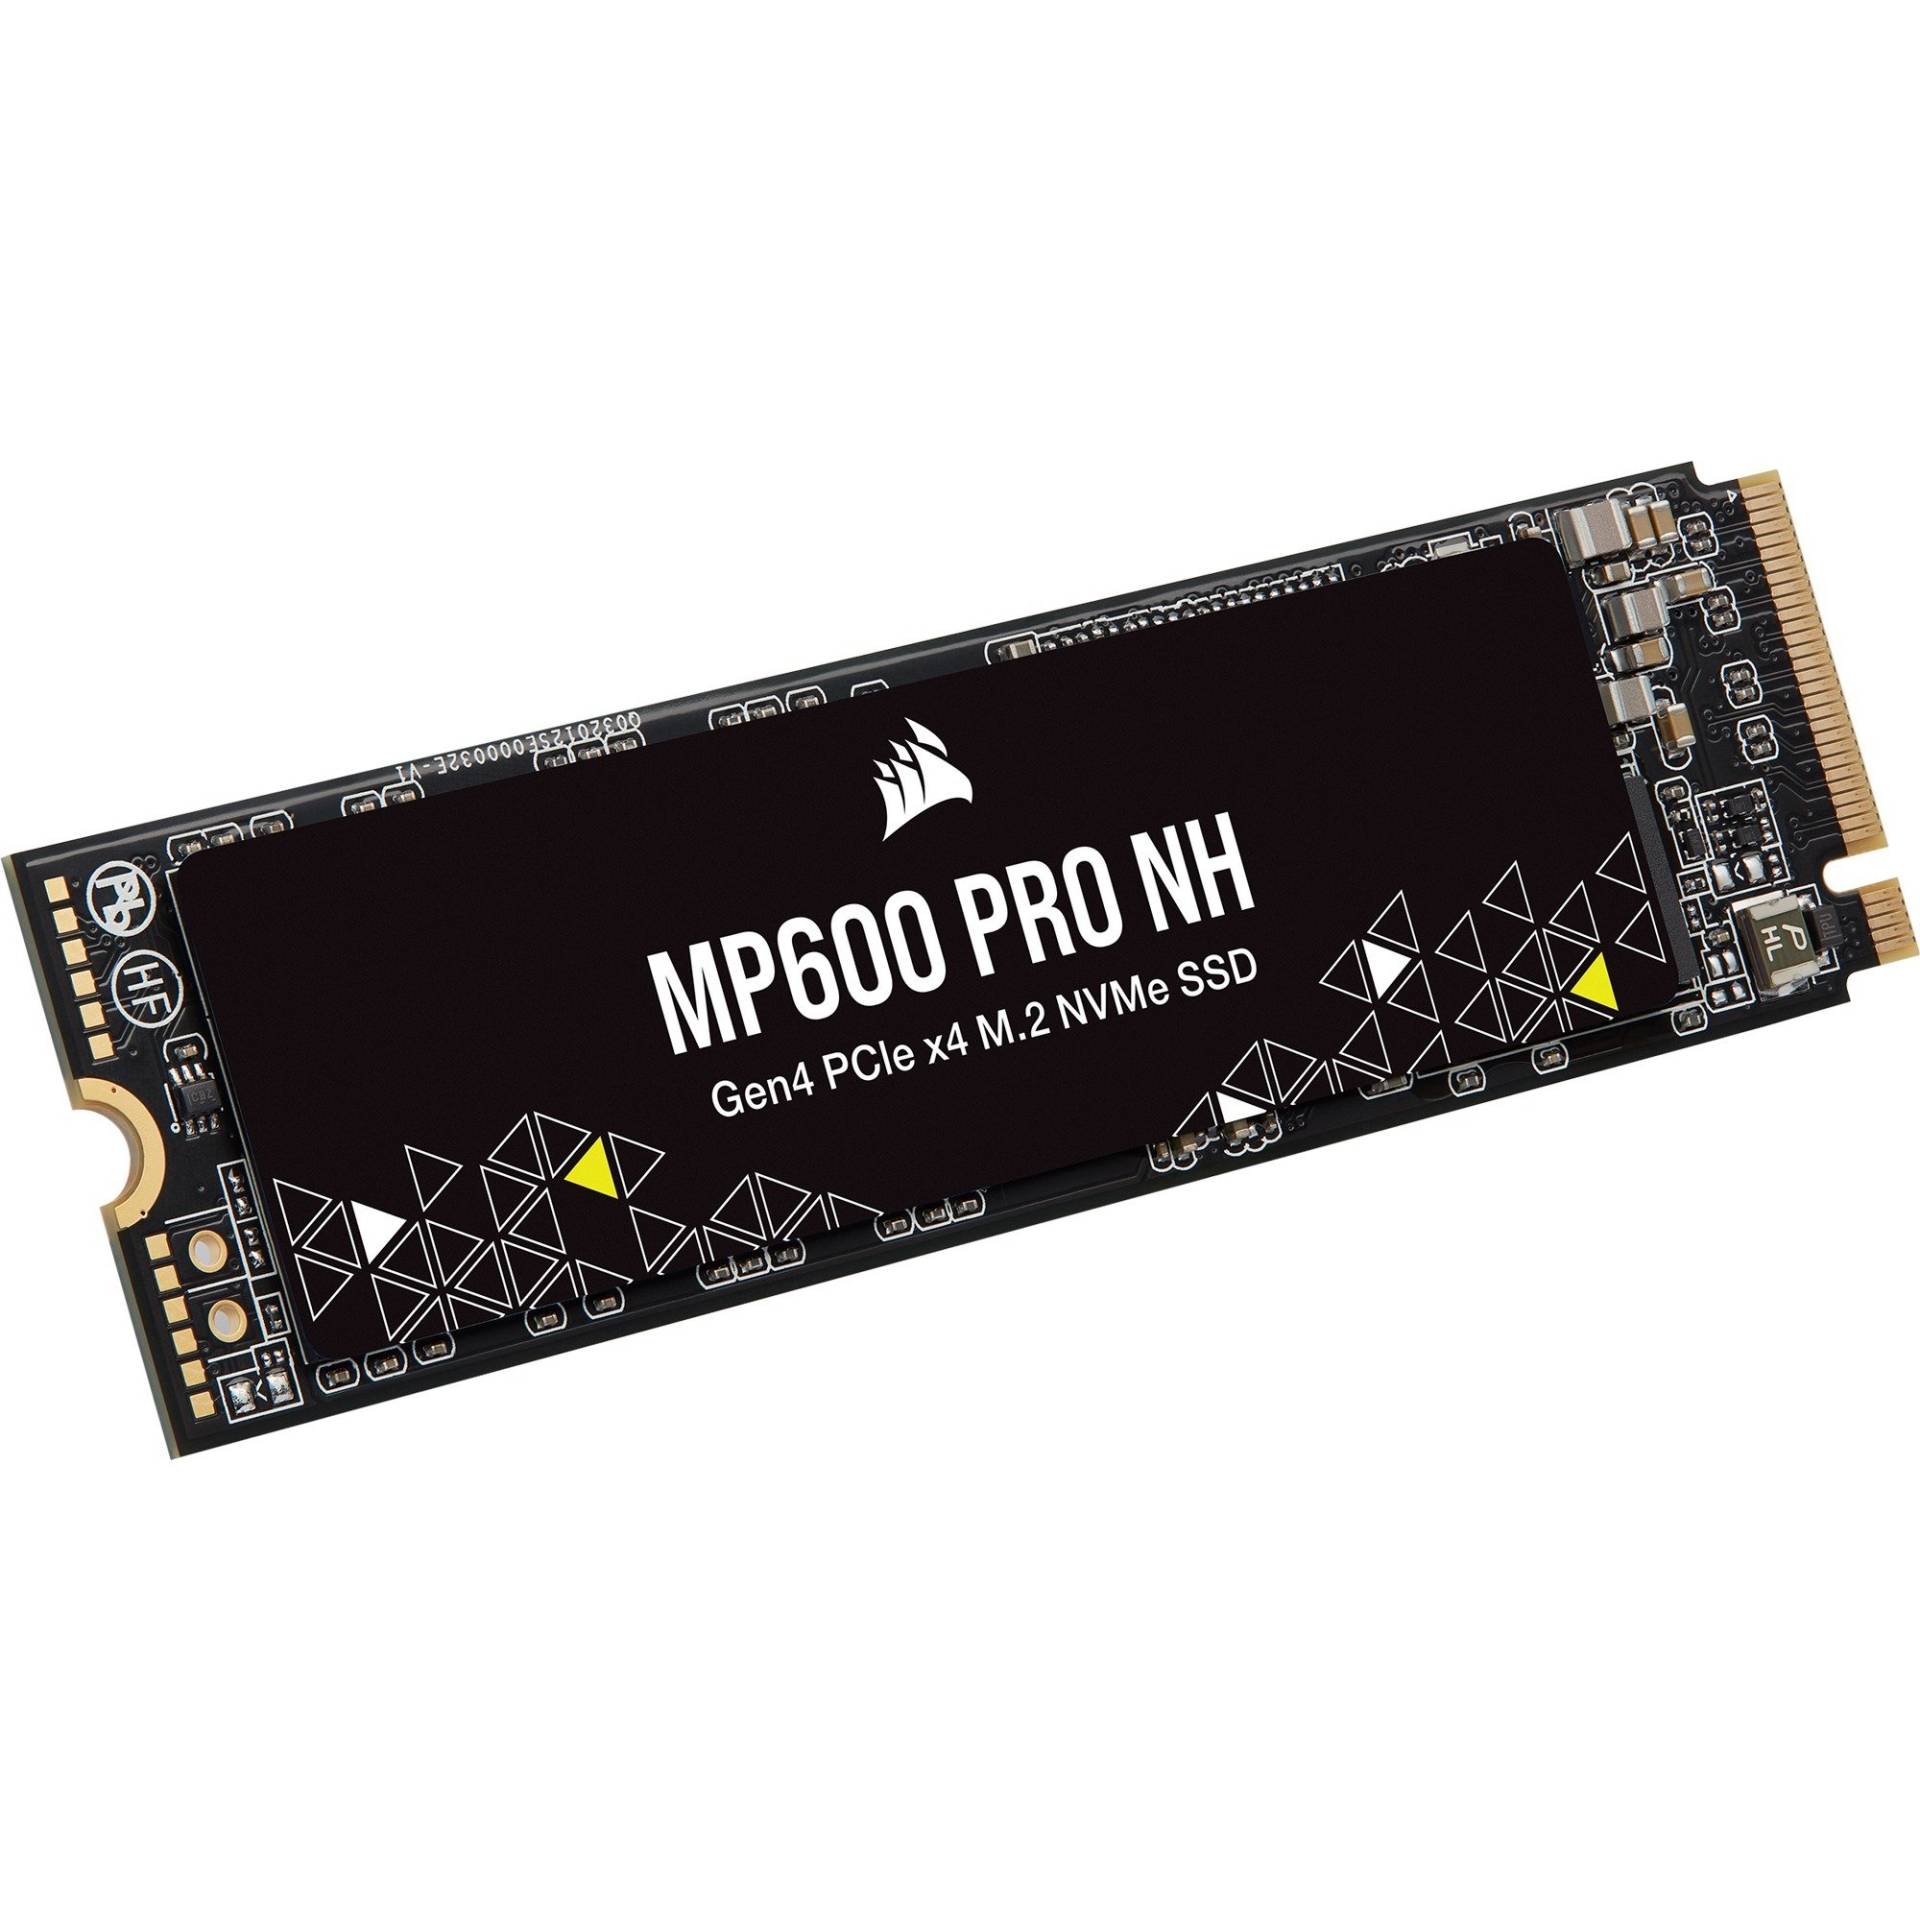 MP600 PRO NH 8TB, SSD von Corsair